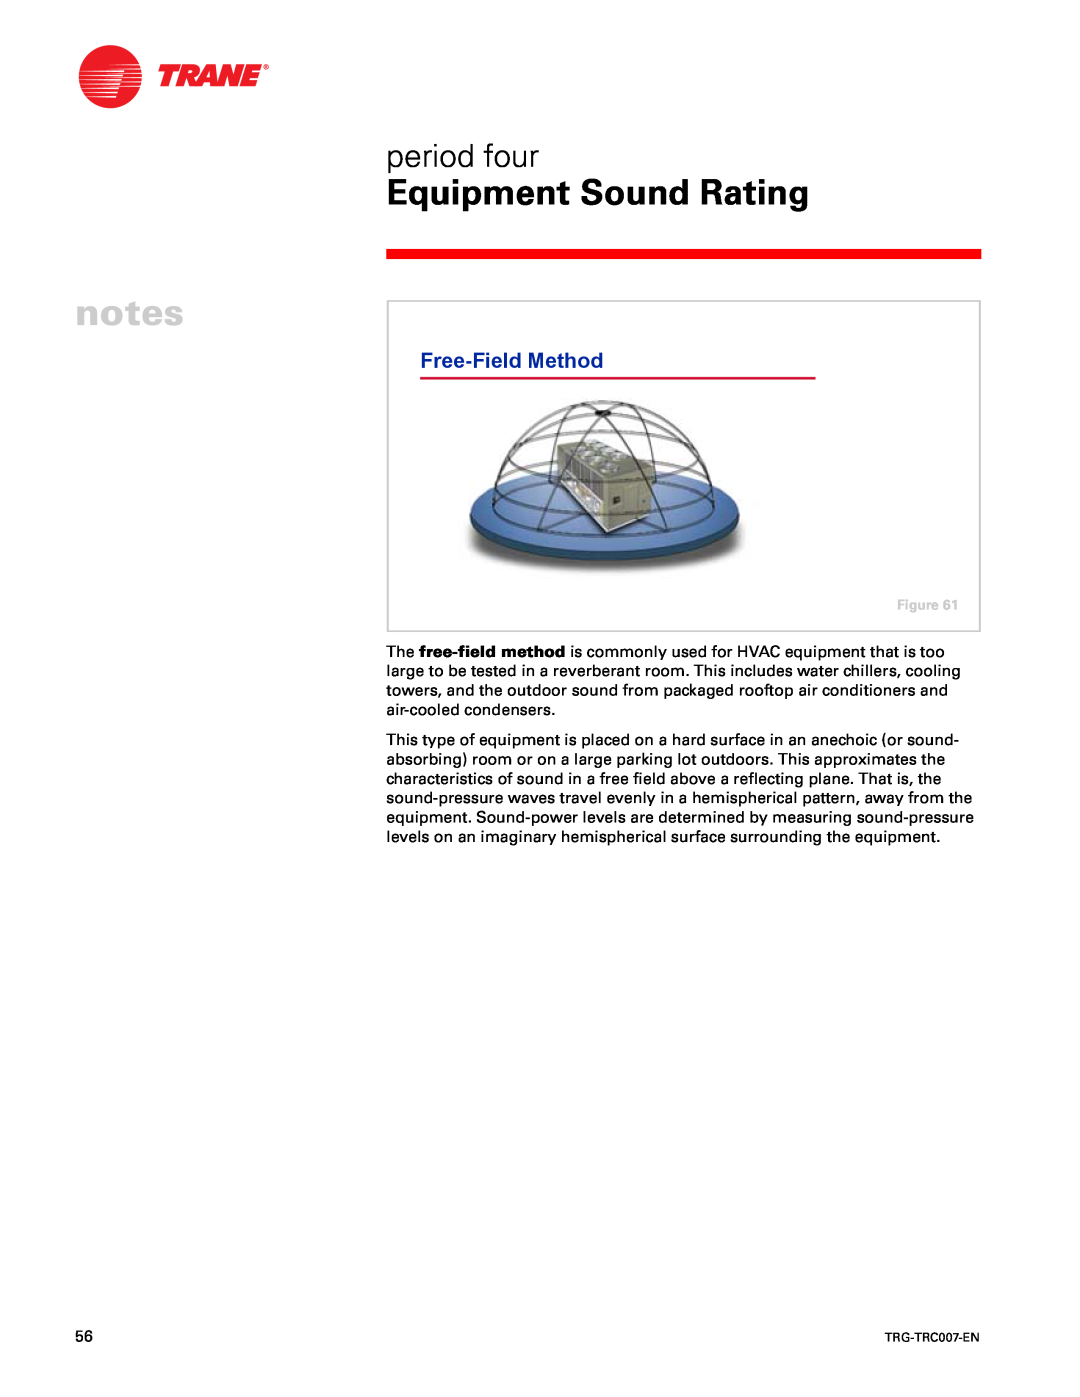 Trane TRG-TRC007-EN manual Free-FieldMethod, Equipment Sound Rating, period four 